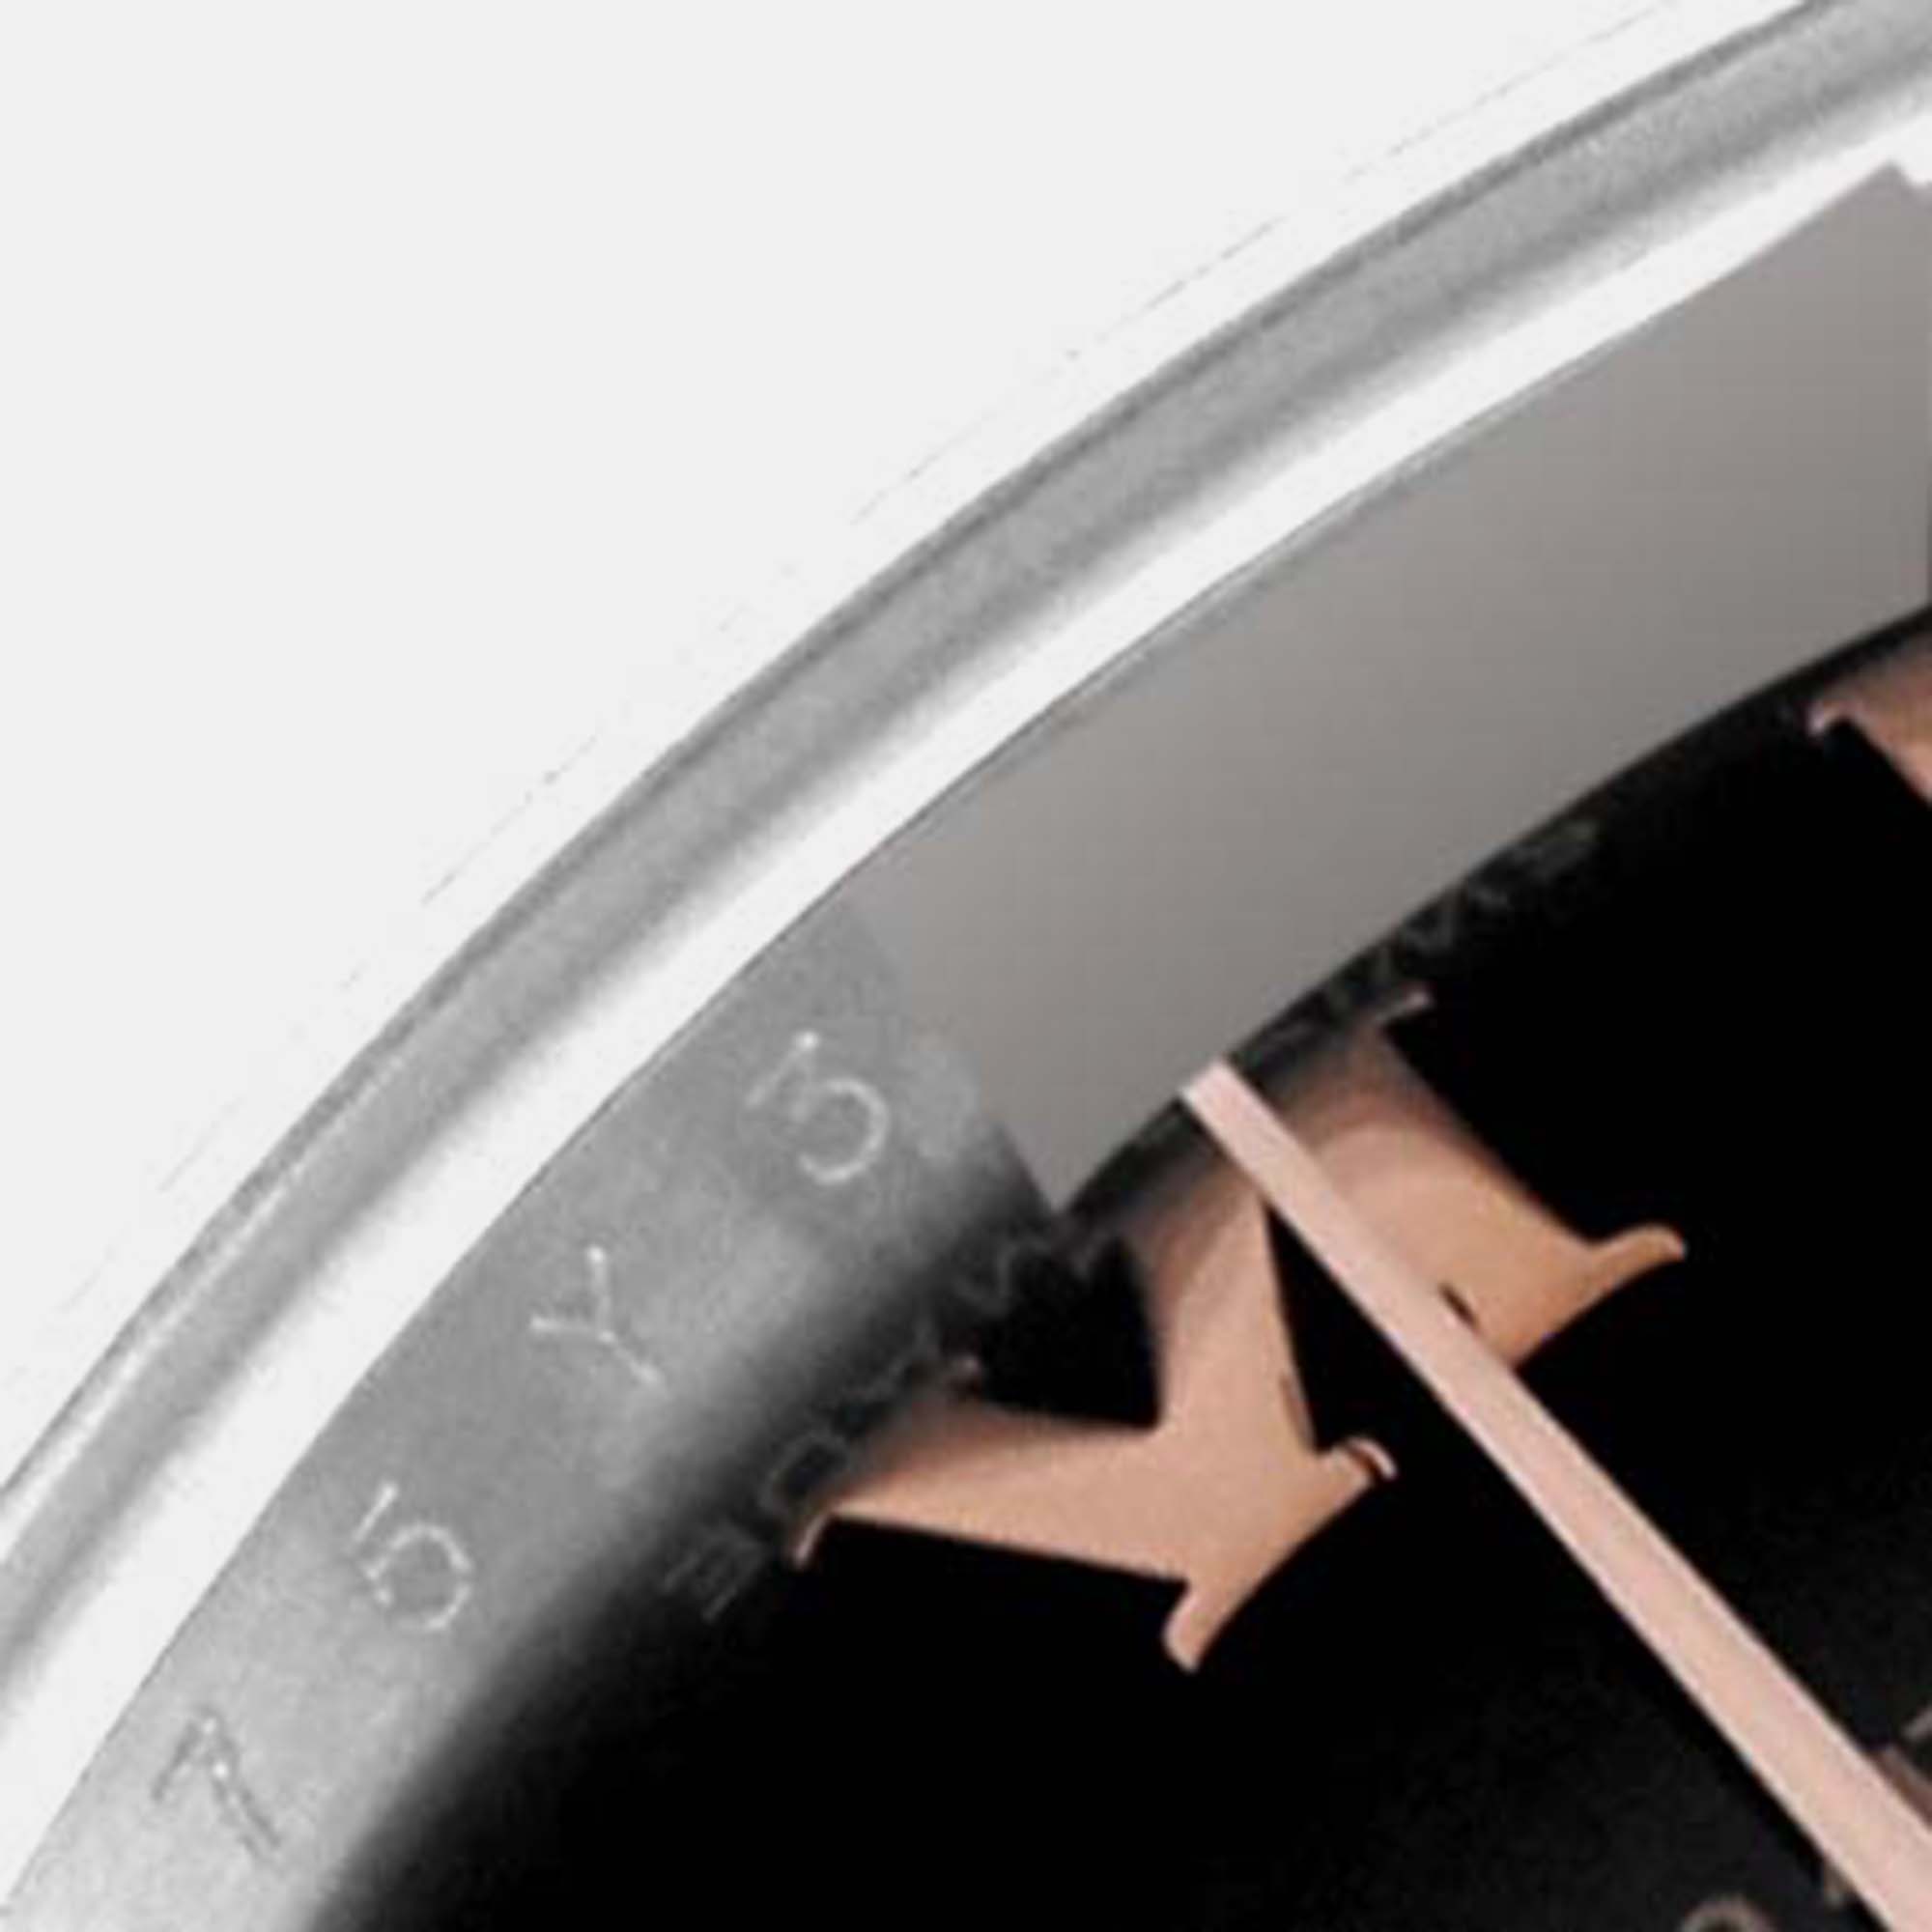 Rolex Datejust Steel Rose Gold Black Dial Ladies Watch 179171 26 Mm